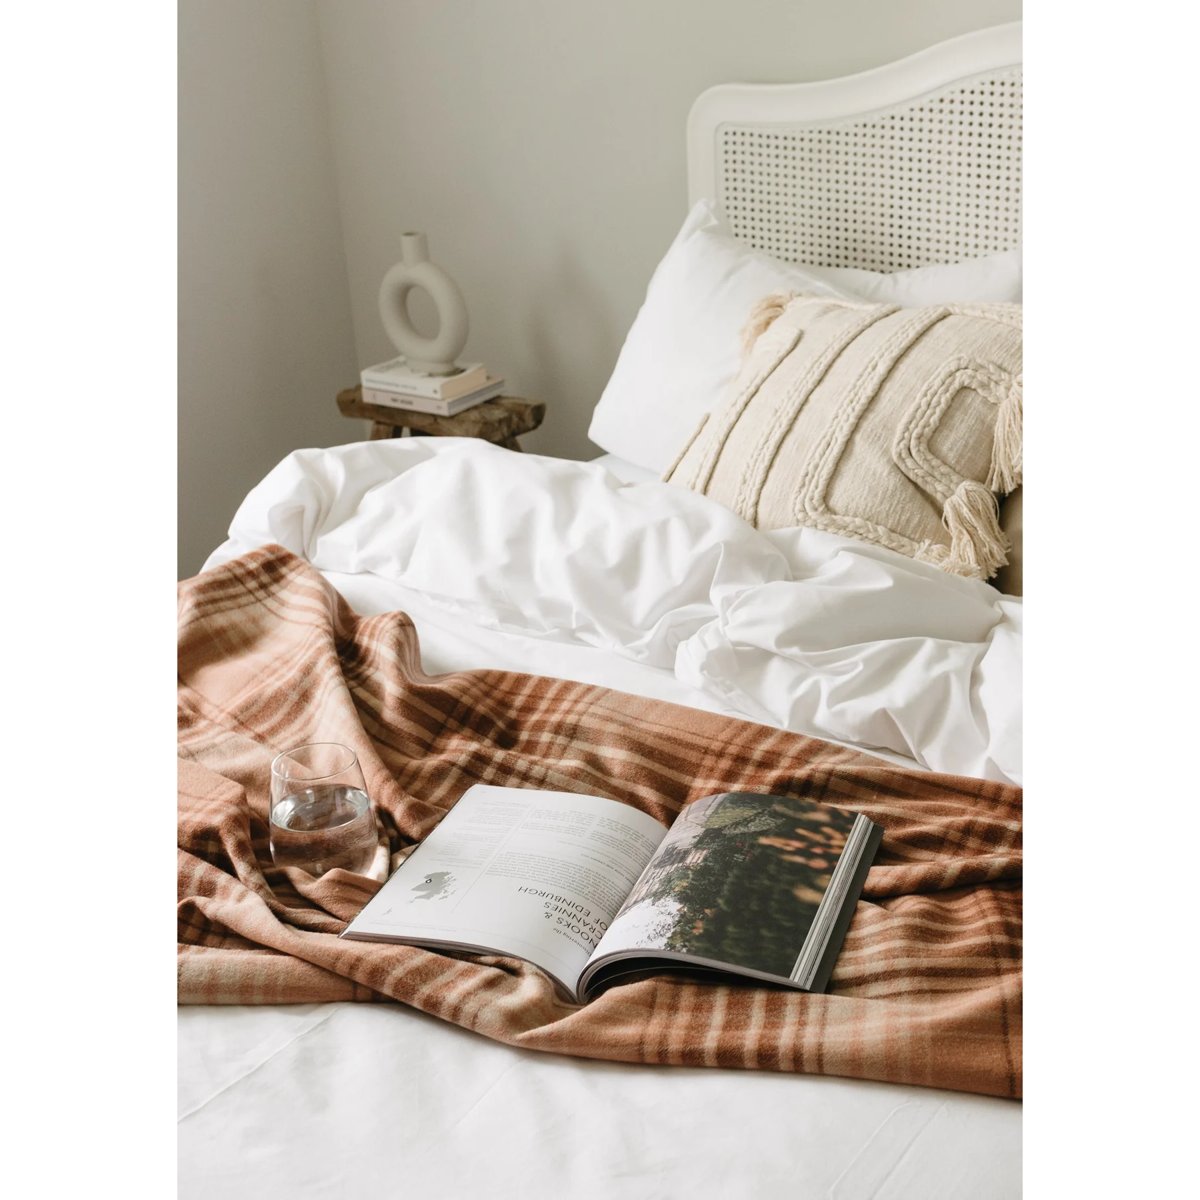 mondocherry - TBCo lambswool blanket - blush gradient - check - bed